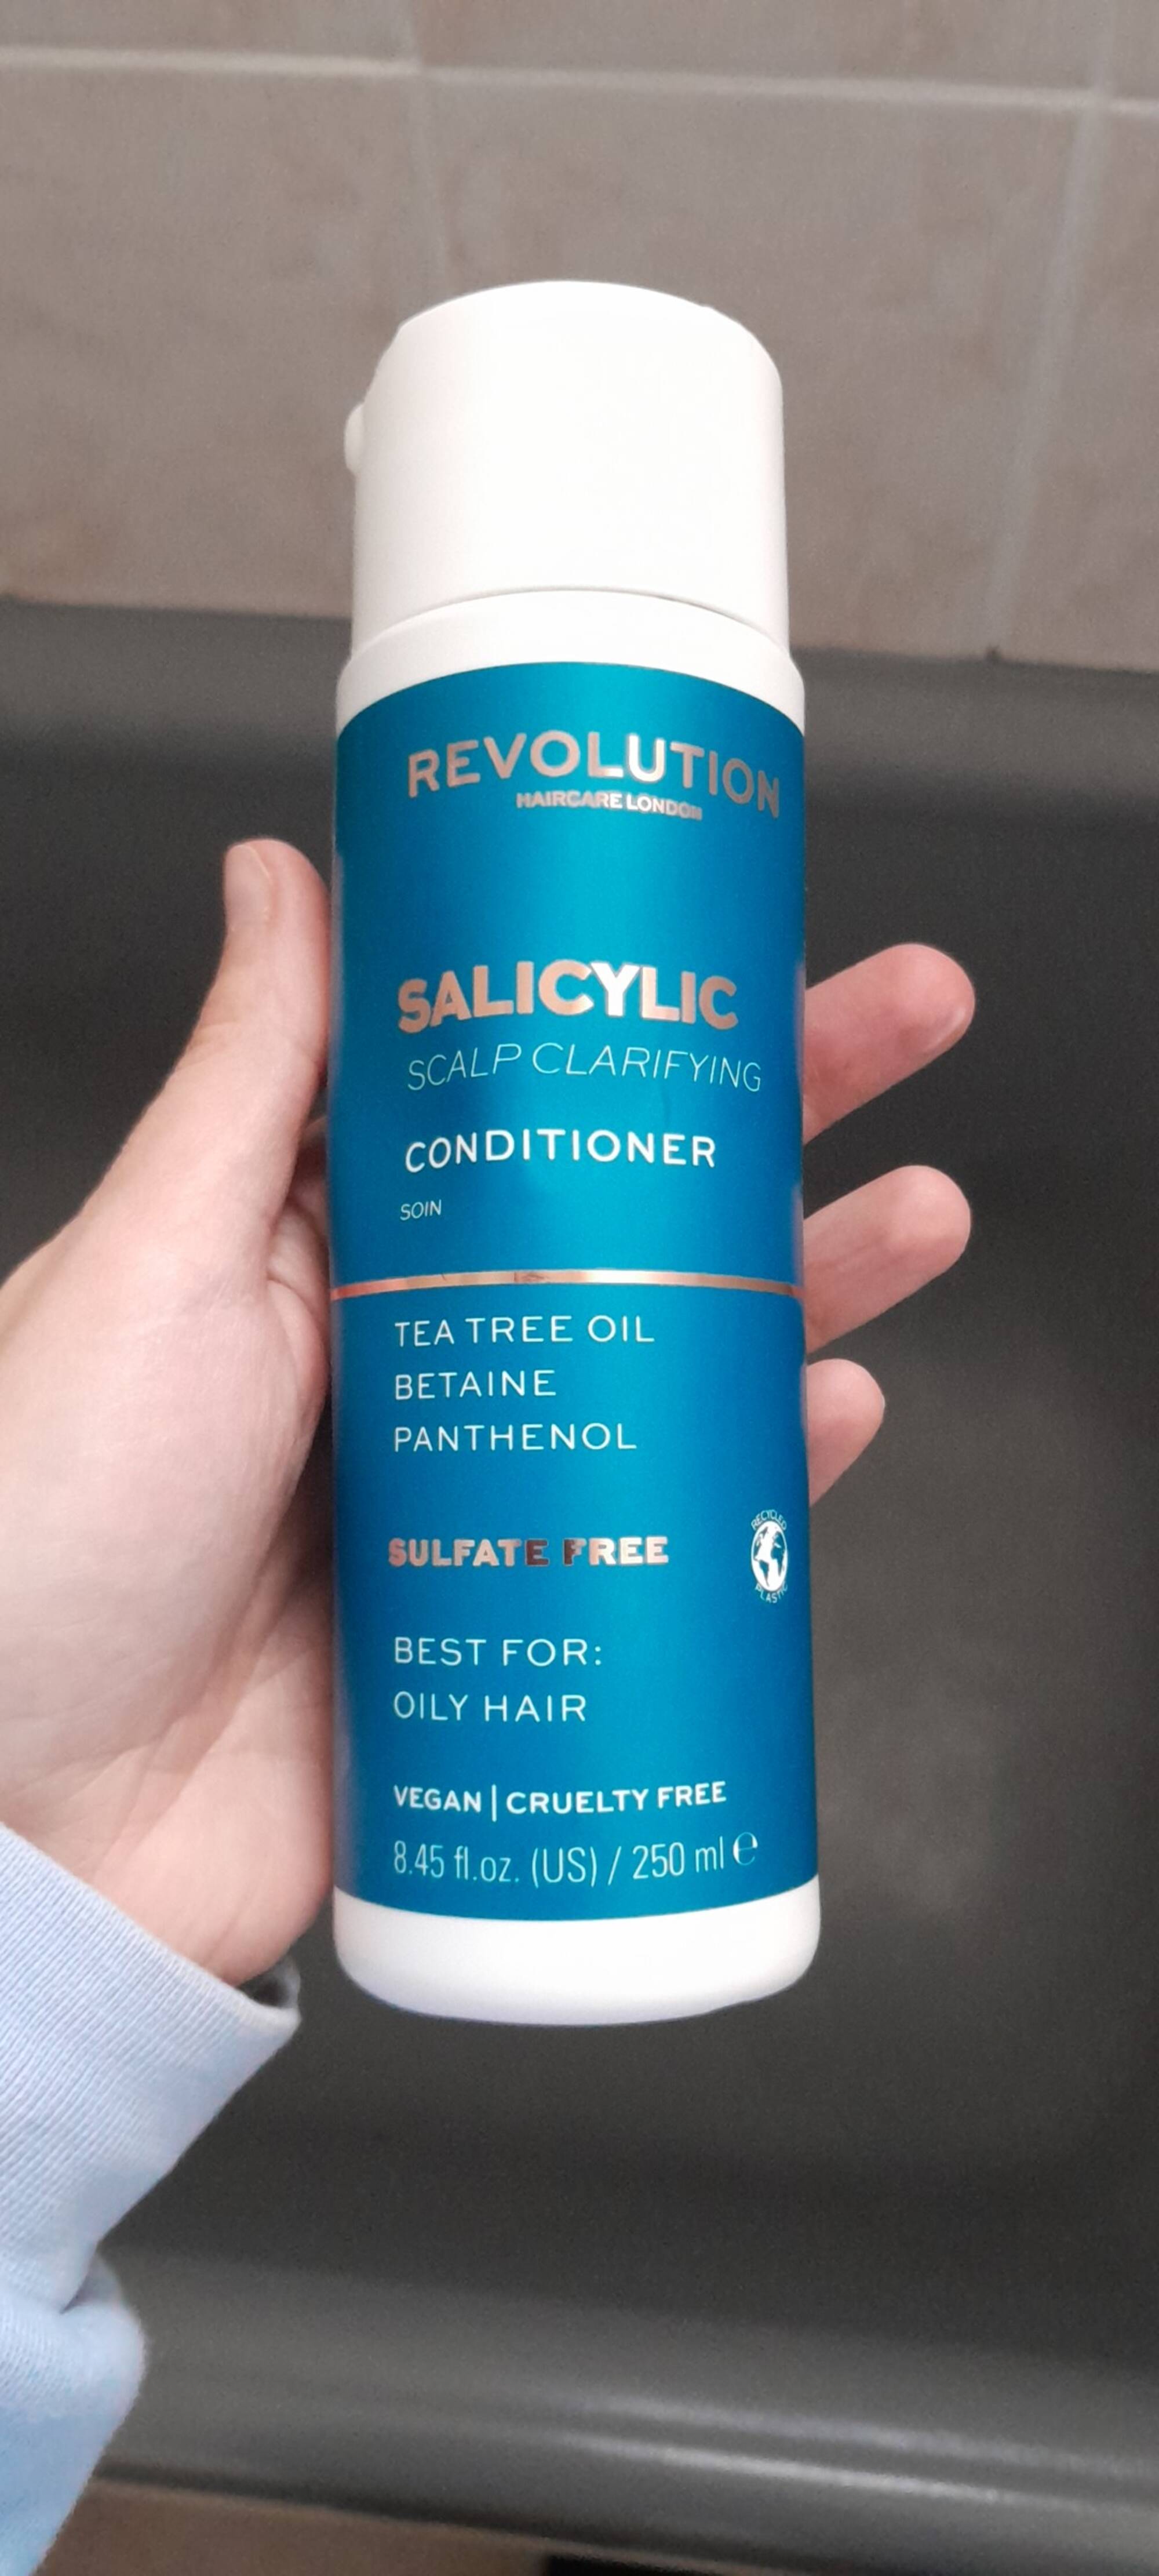 REVOLUTION - Salicylic - Conditioner